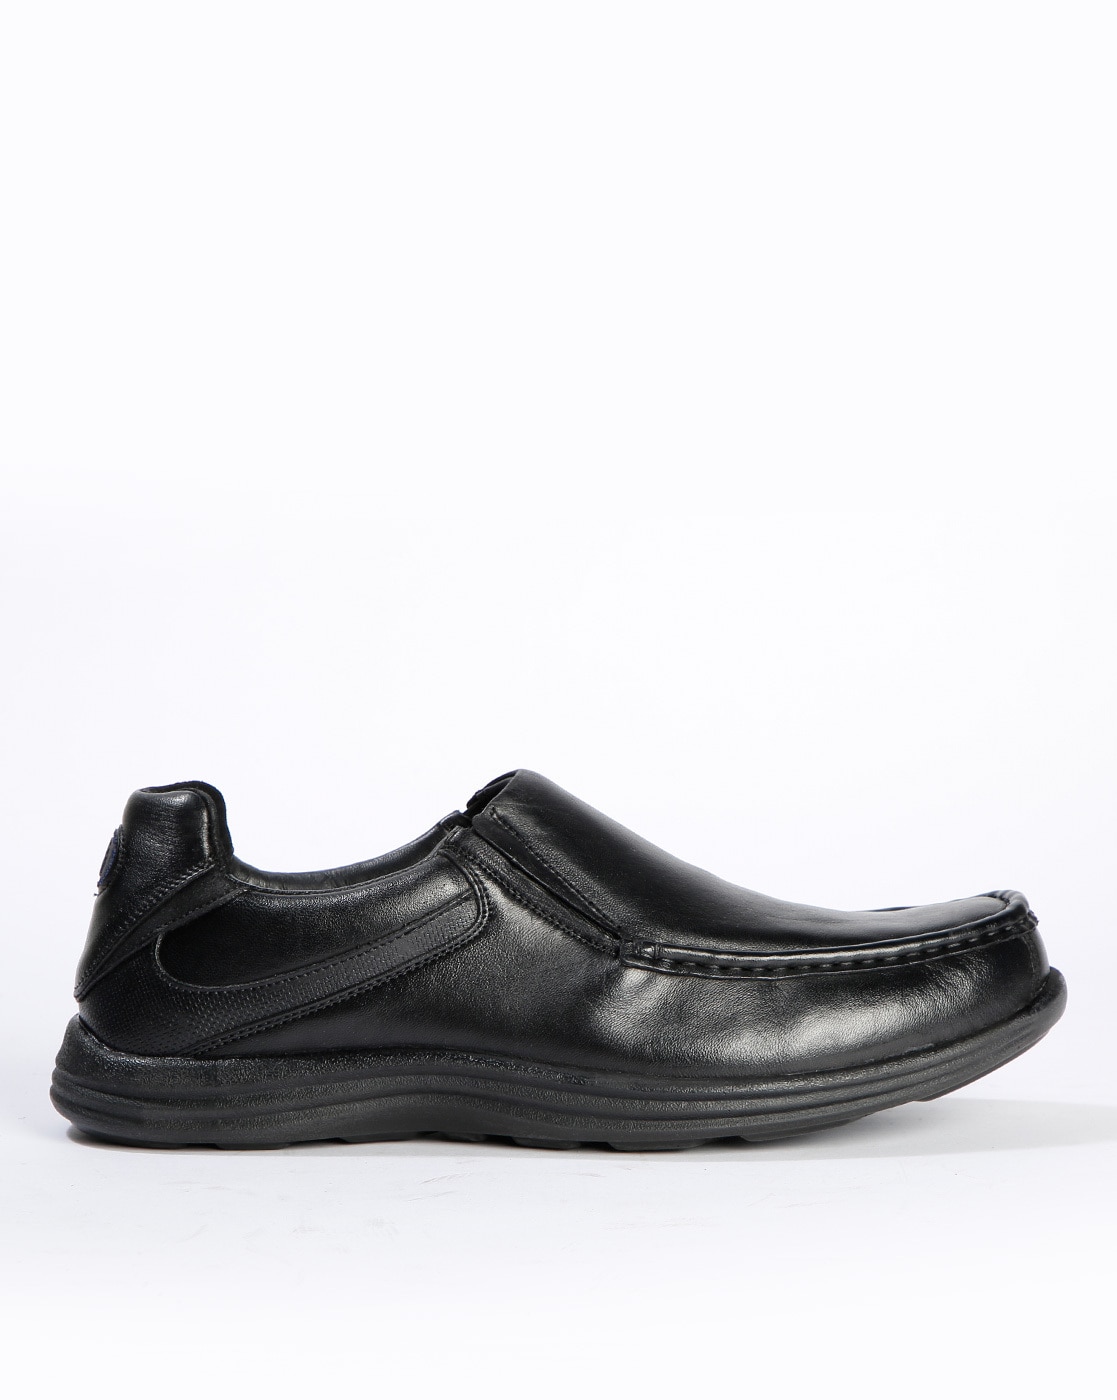 Buy Black Formal Shoes Men HUSH PUPPIES | Ajio.com